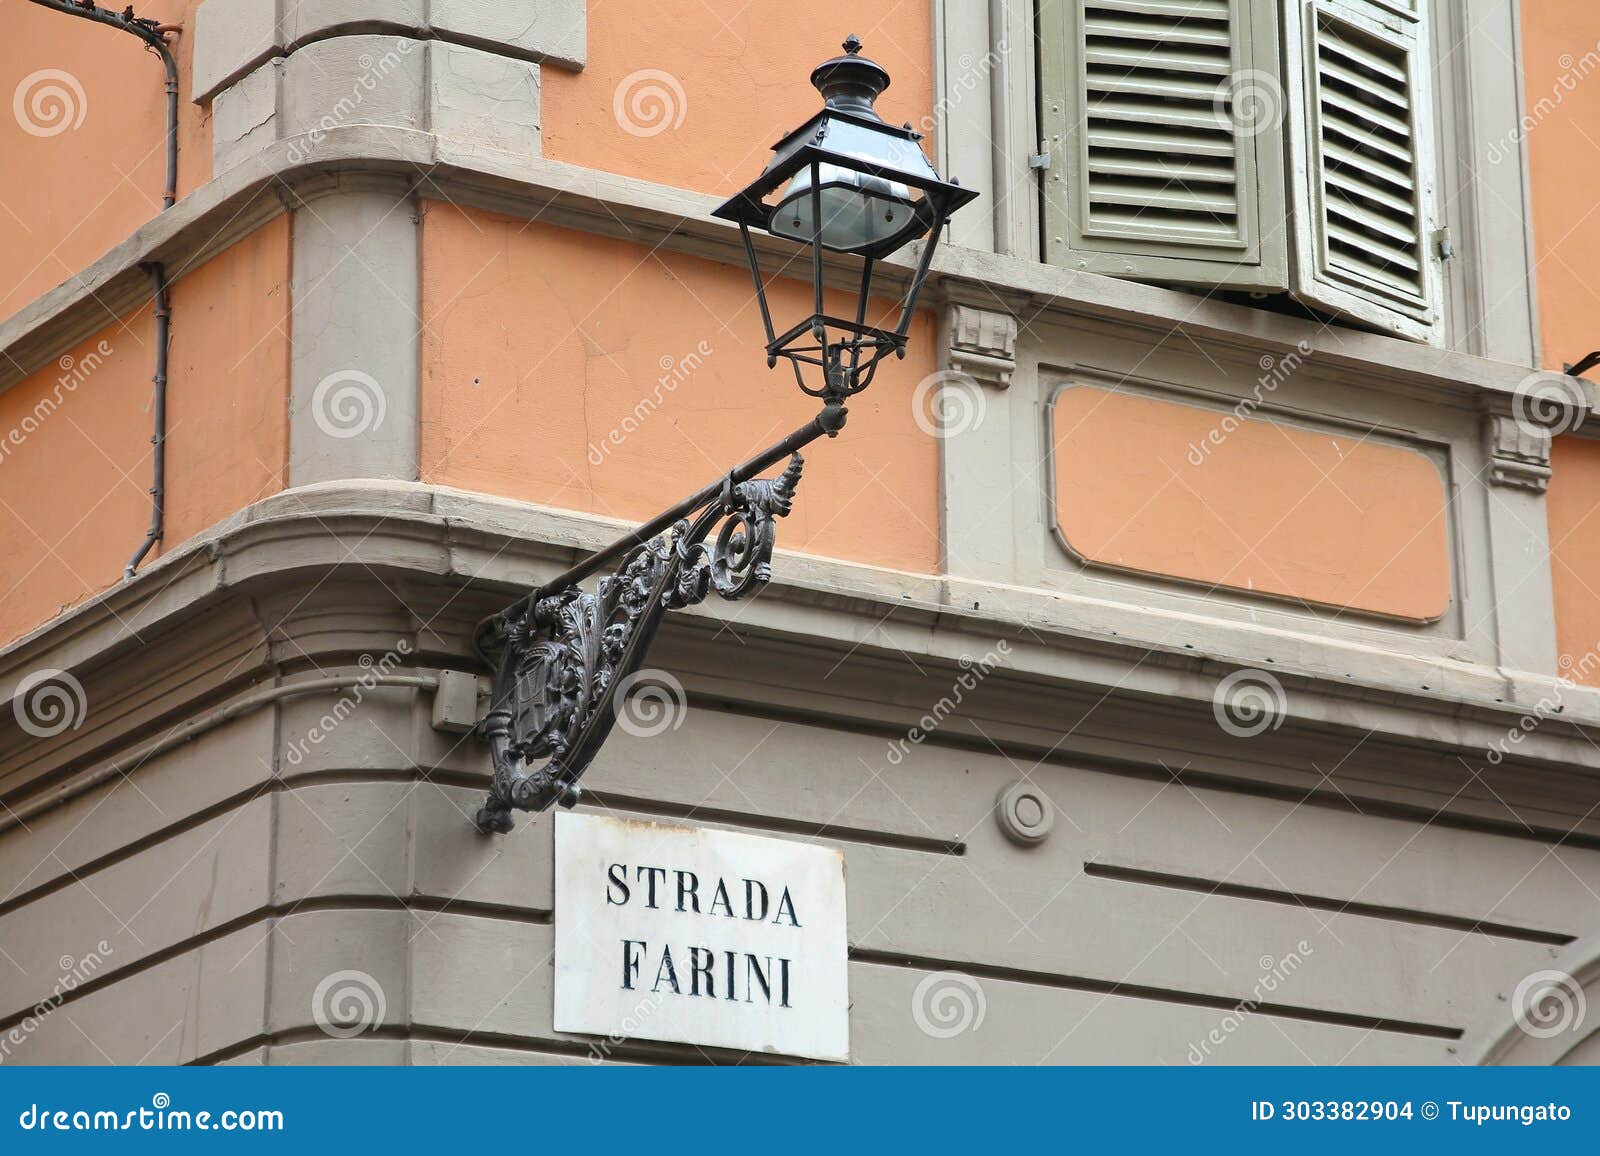 parma italian town - strada farini